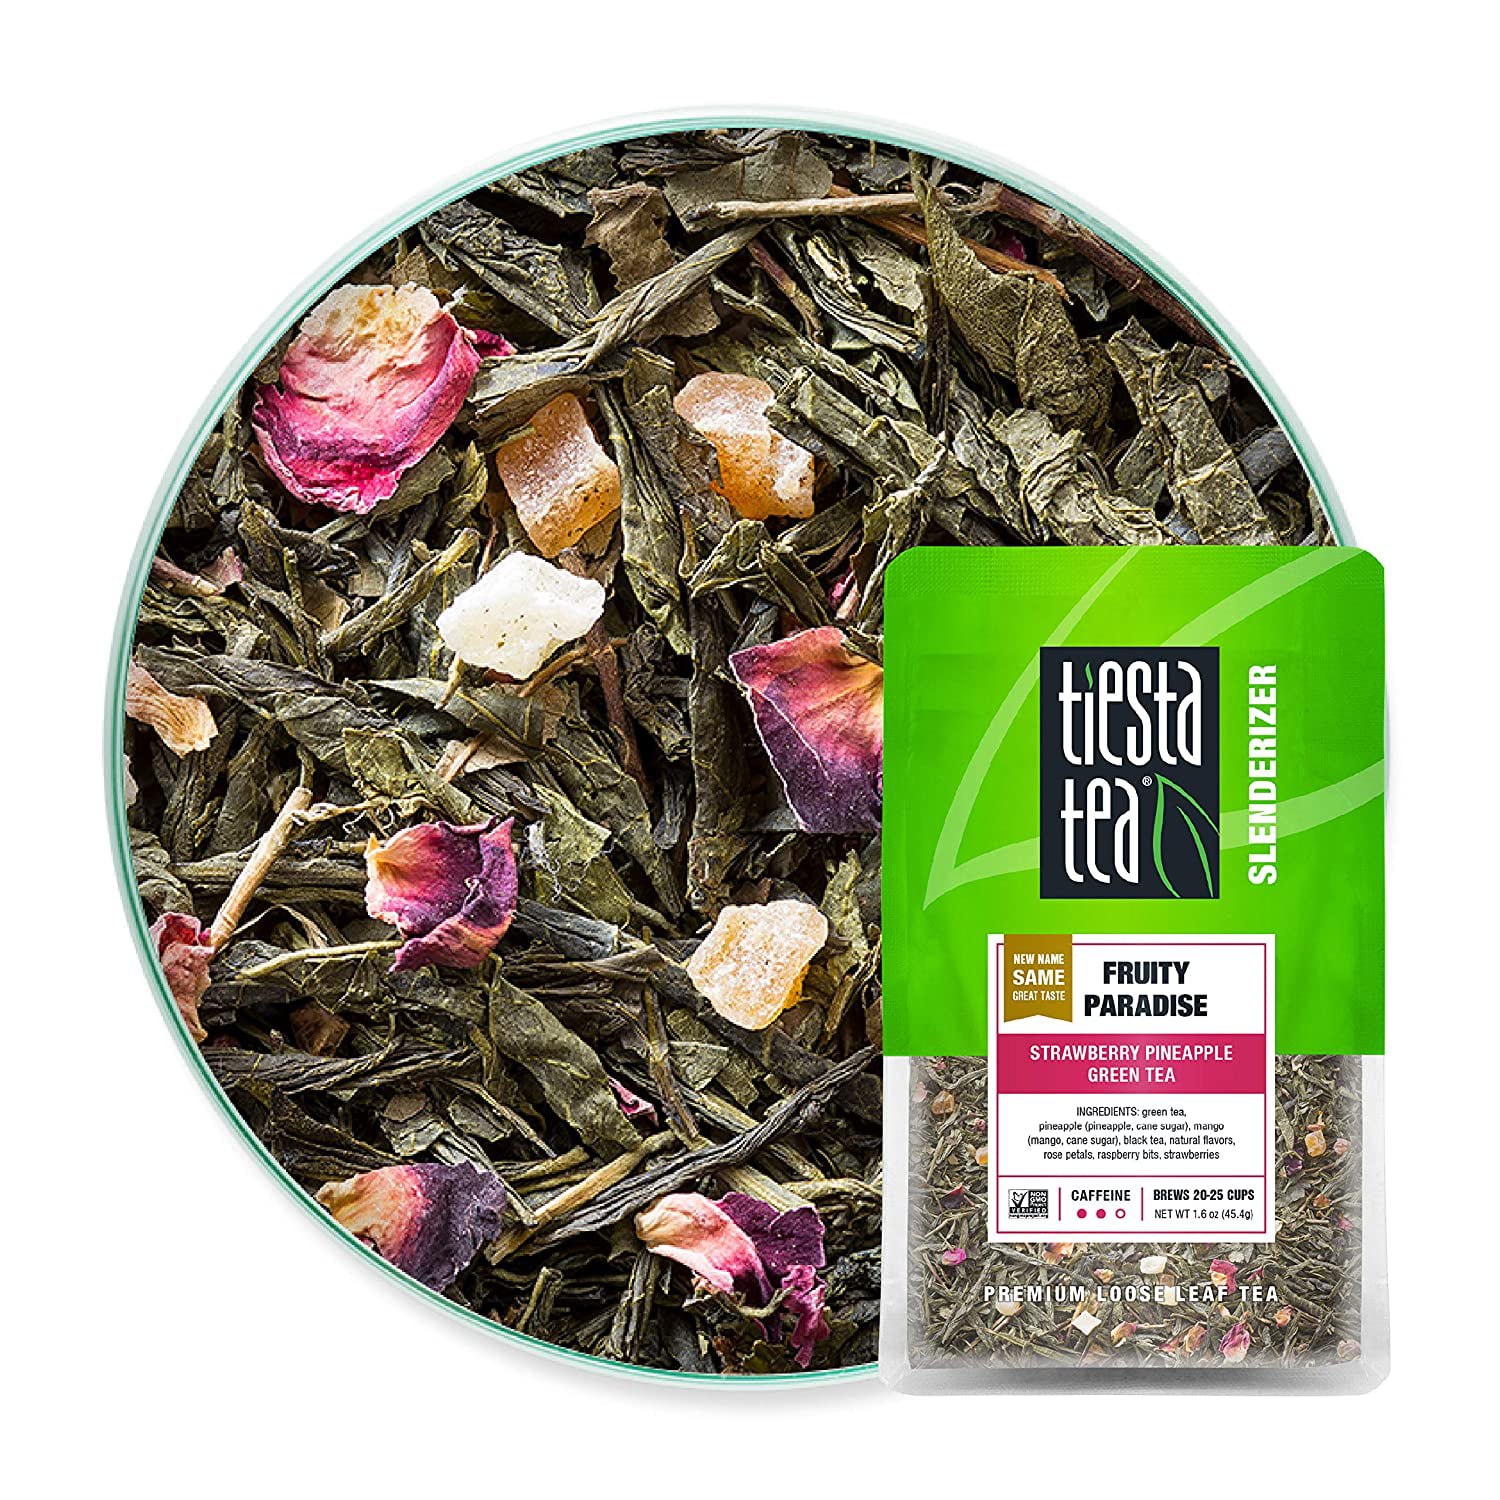 Tiesta Tea Fruity Paradise, Strawberry Pineapple Loose Leaf Green Tea